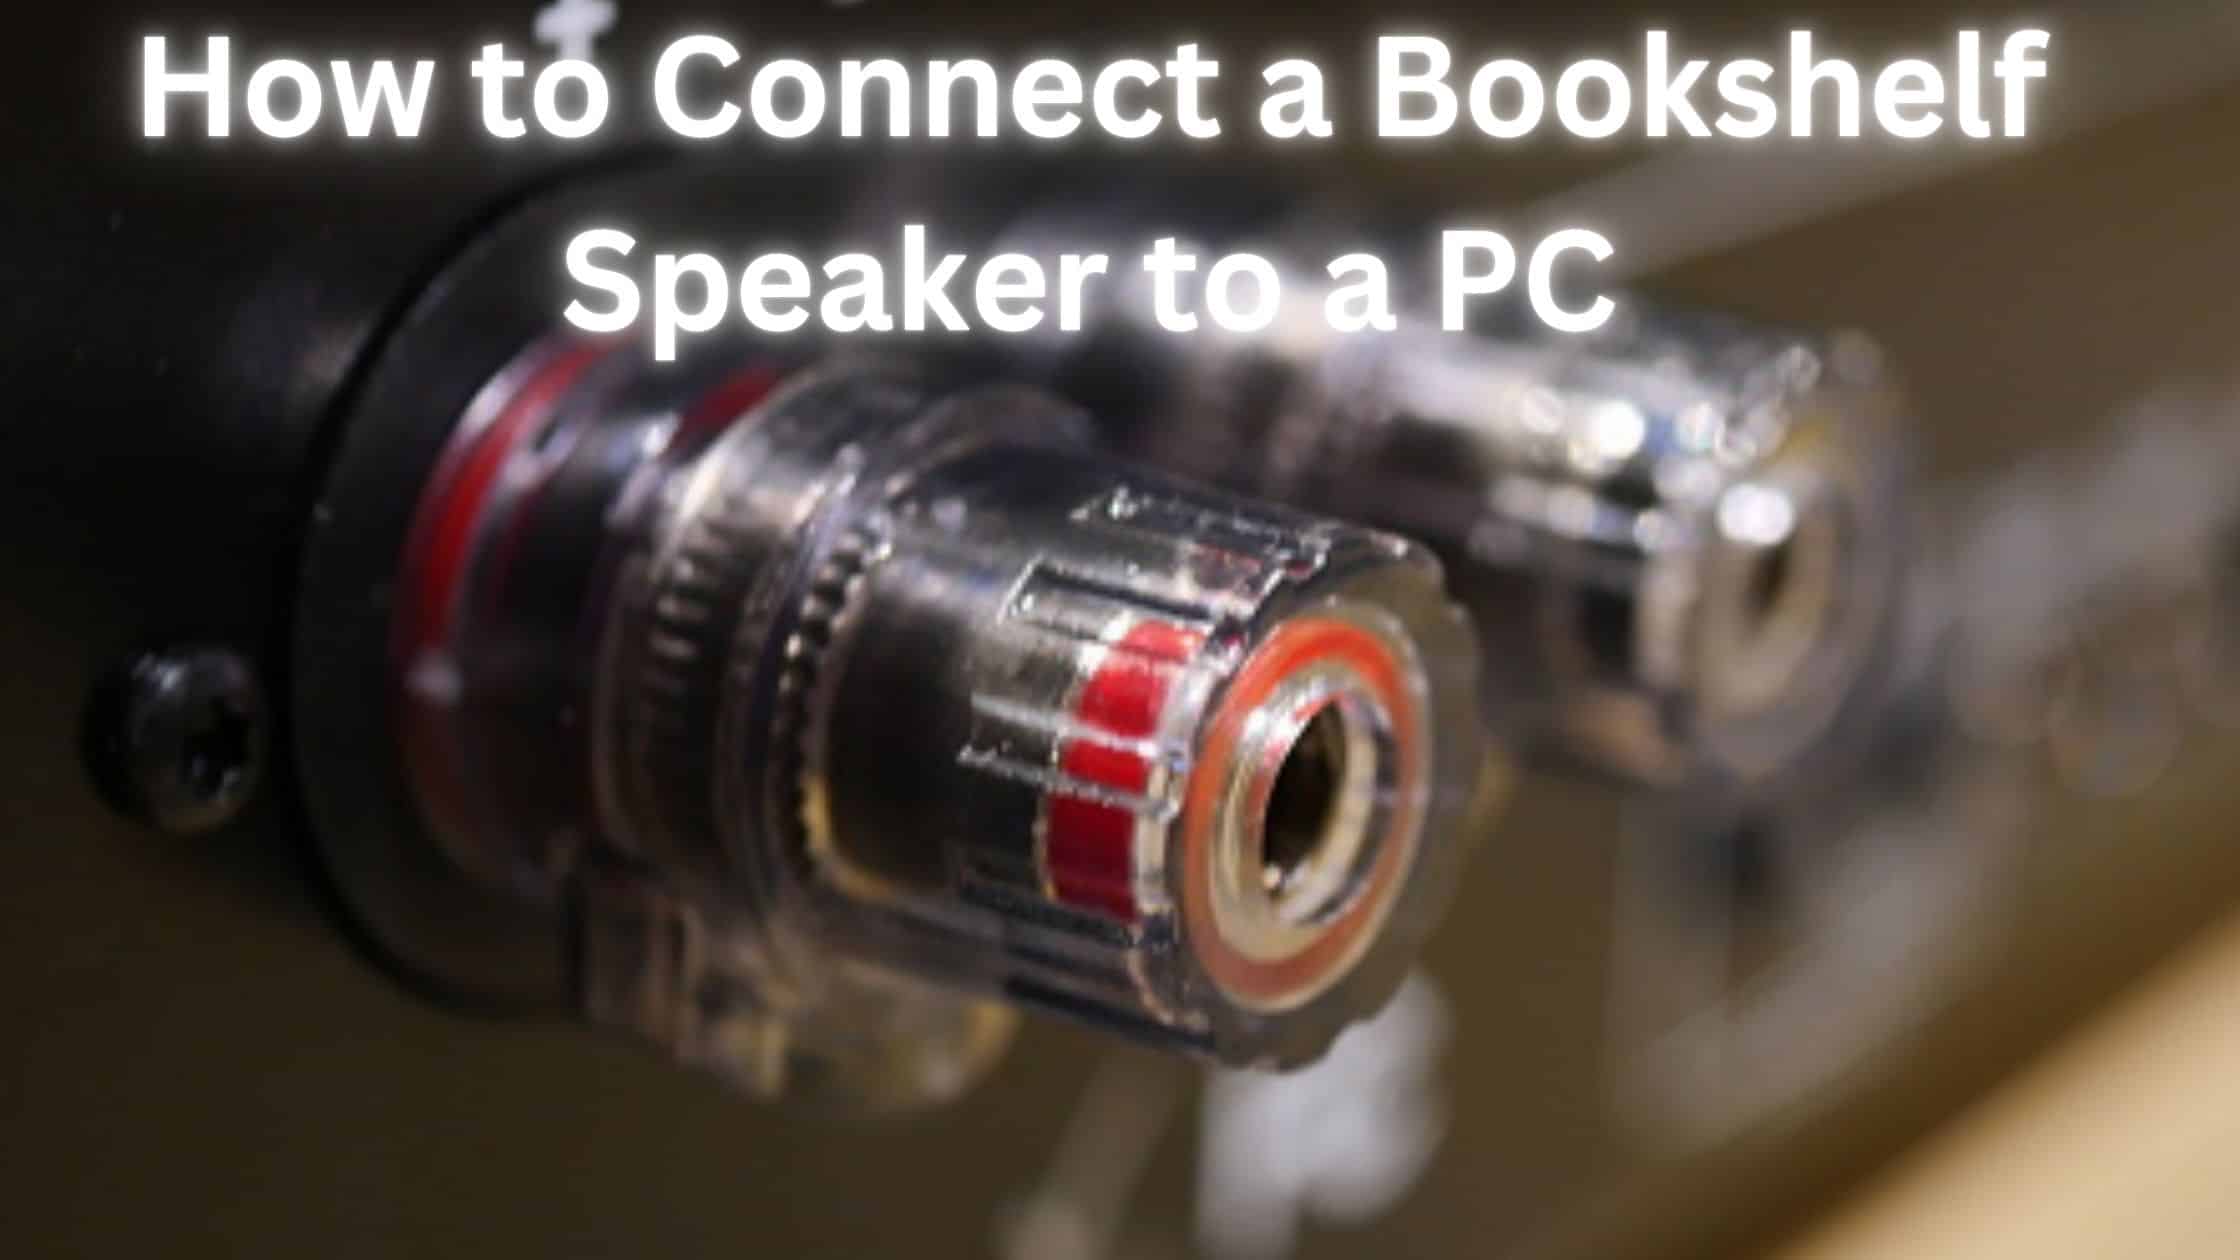 onnect a Bookshelf Speaker to a PC